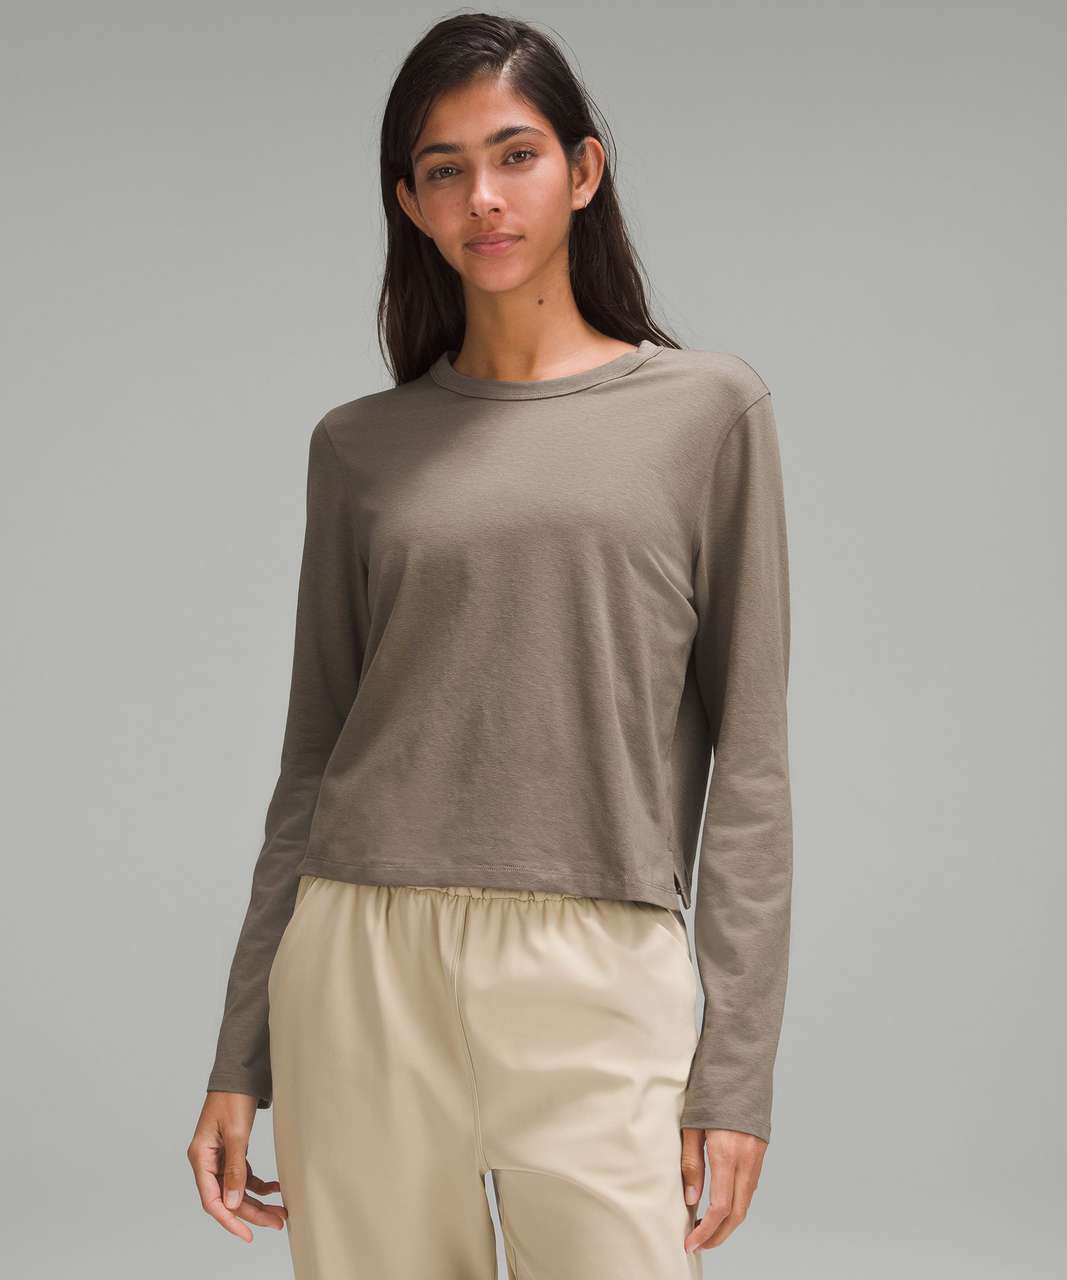 Lululemon Classic-Fit Cotton-Blend Long-Sleeve Shirt - Nomad